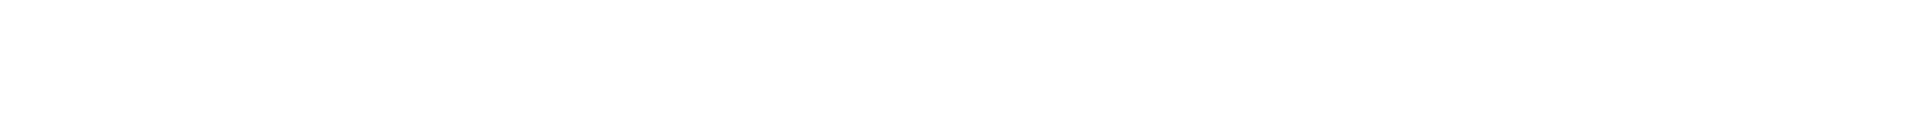 modernmetals.com typography